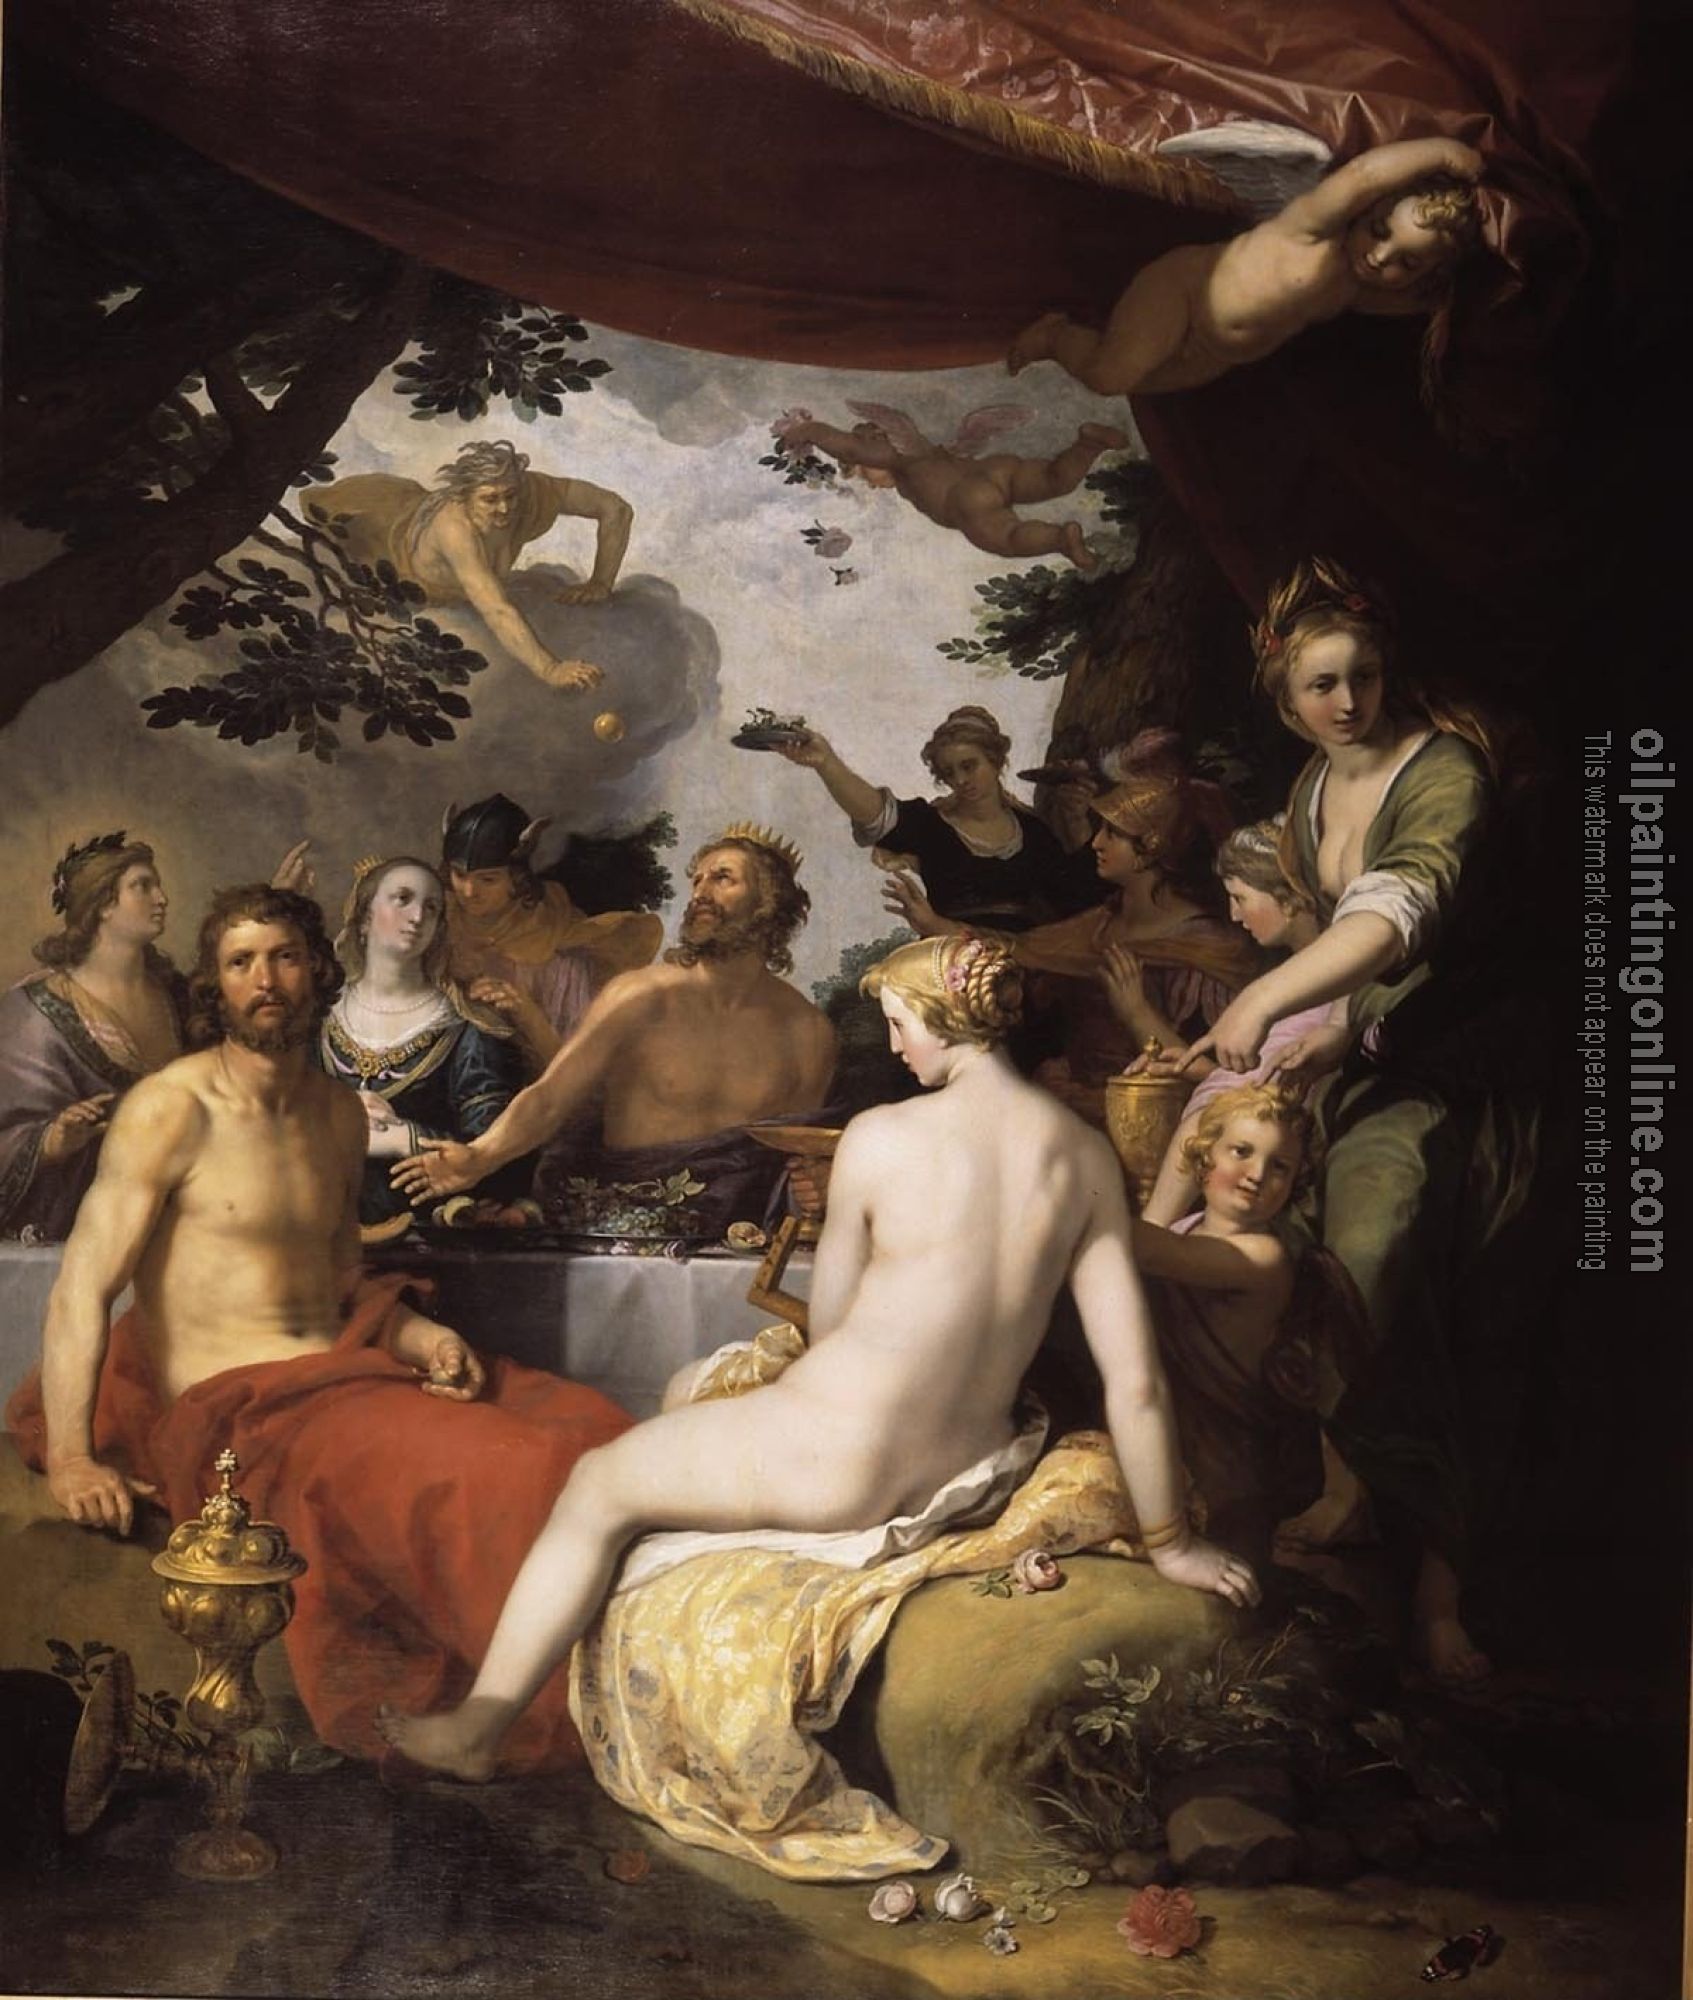 Abraham Bloemaert - The Wedding of Peleus and Thetis